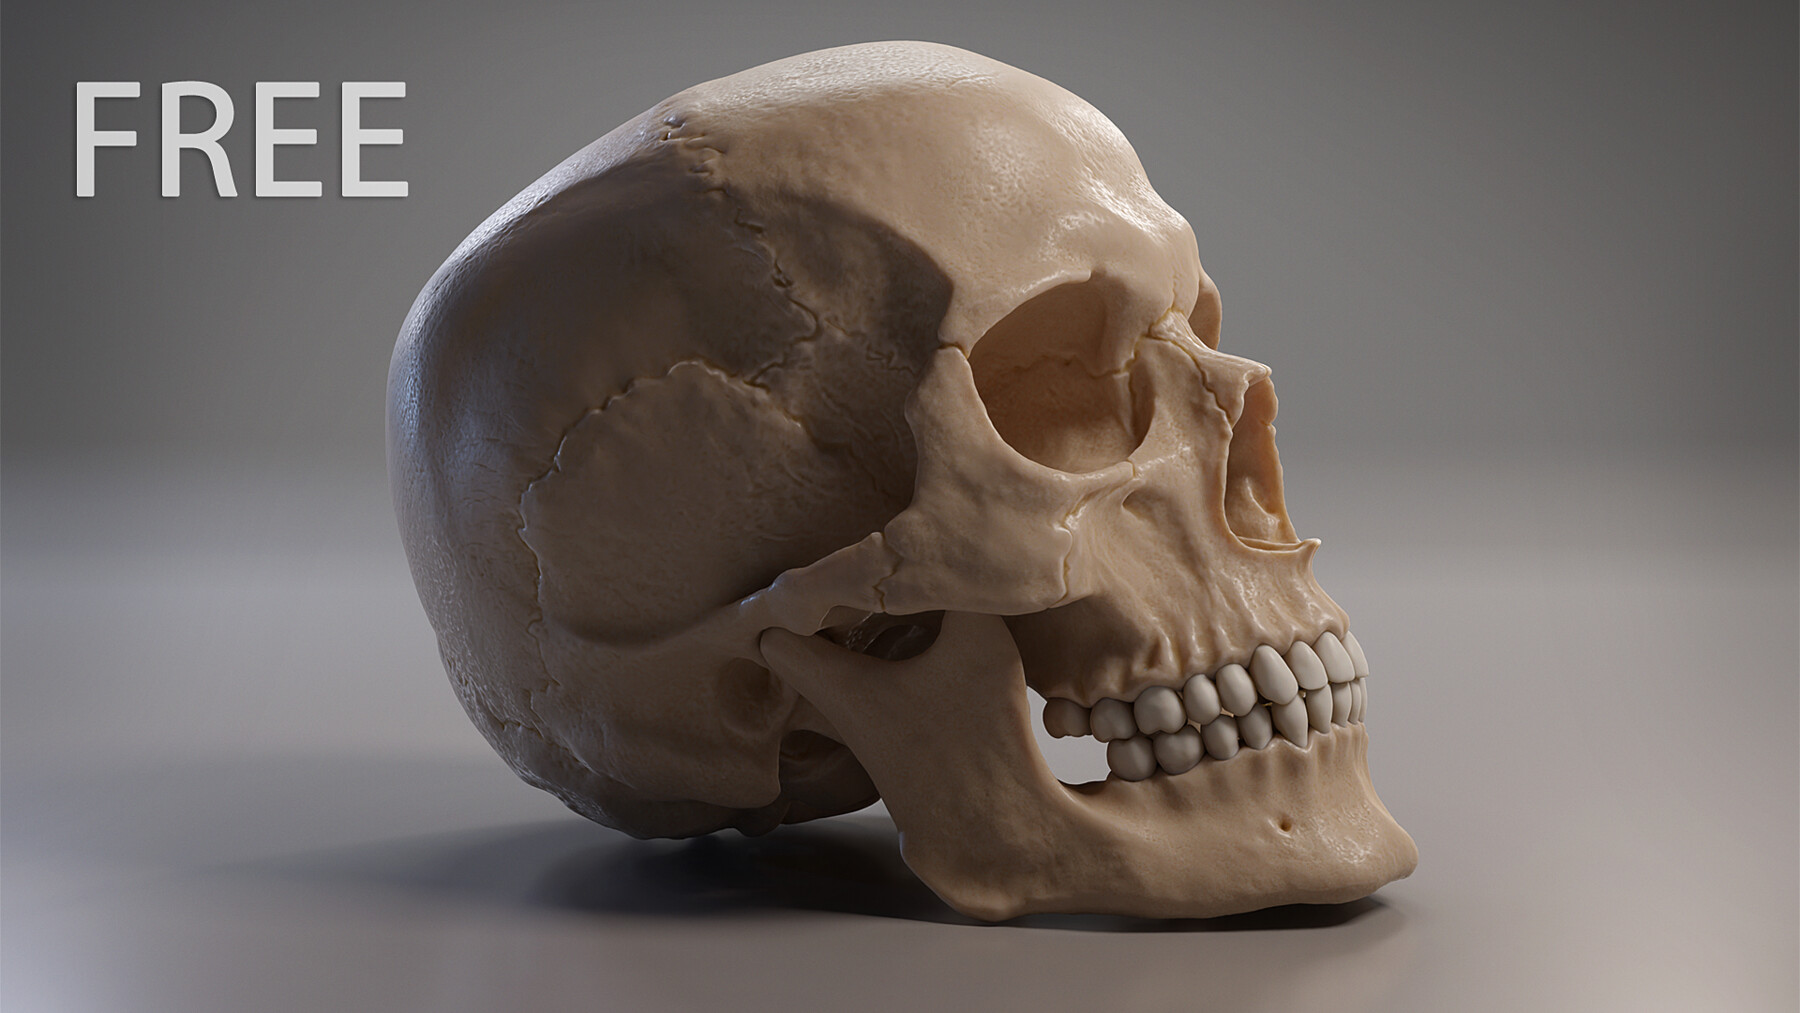 ArtStation - Human Skull Anatomy Tool